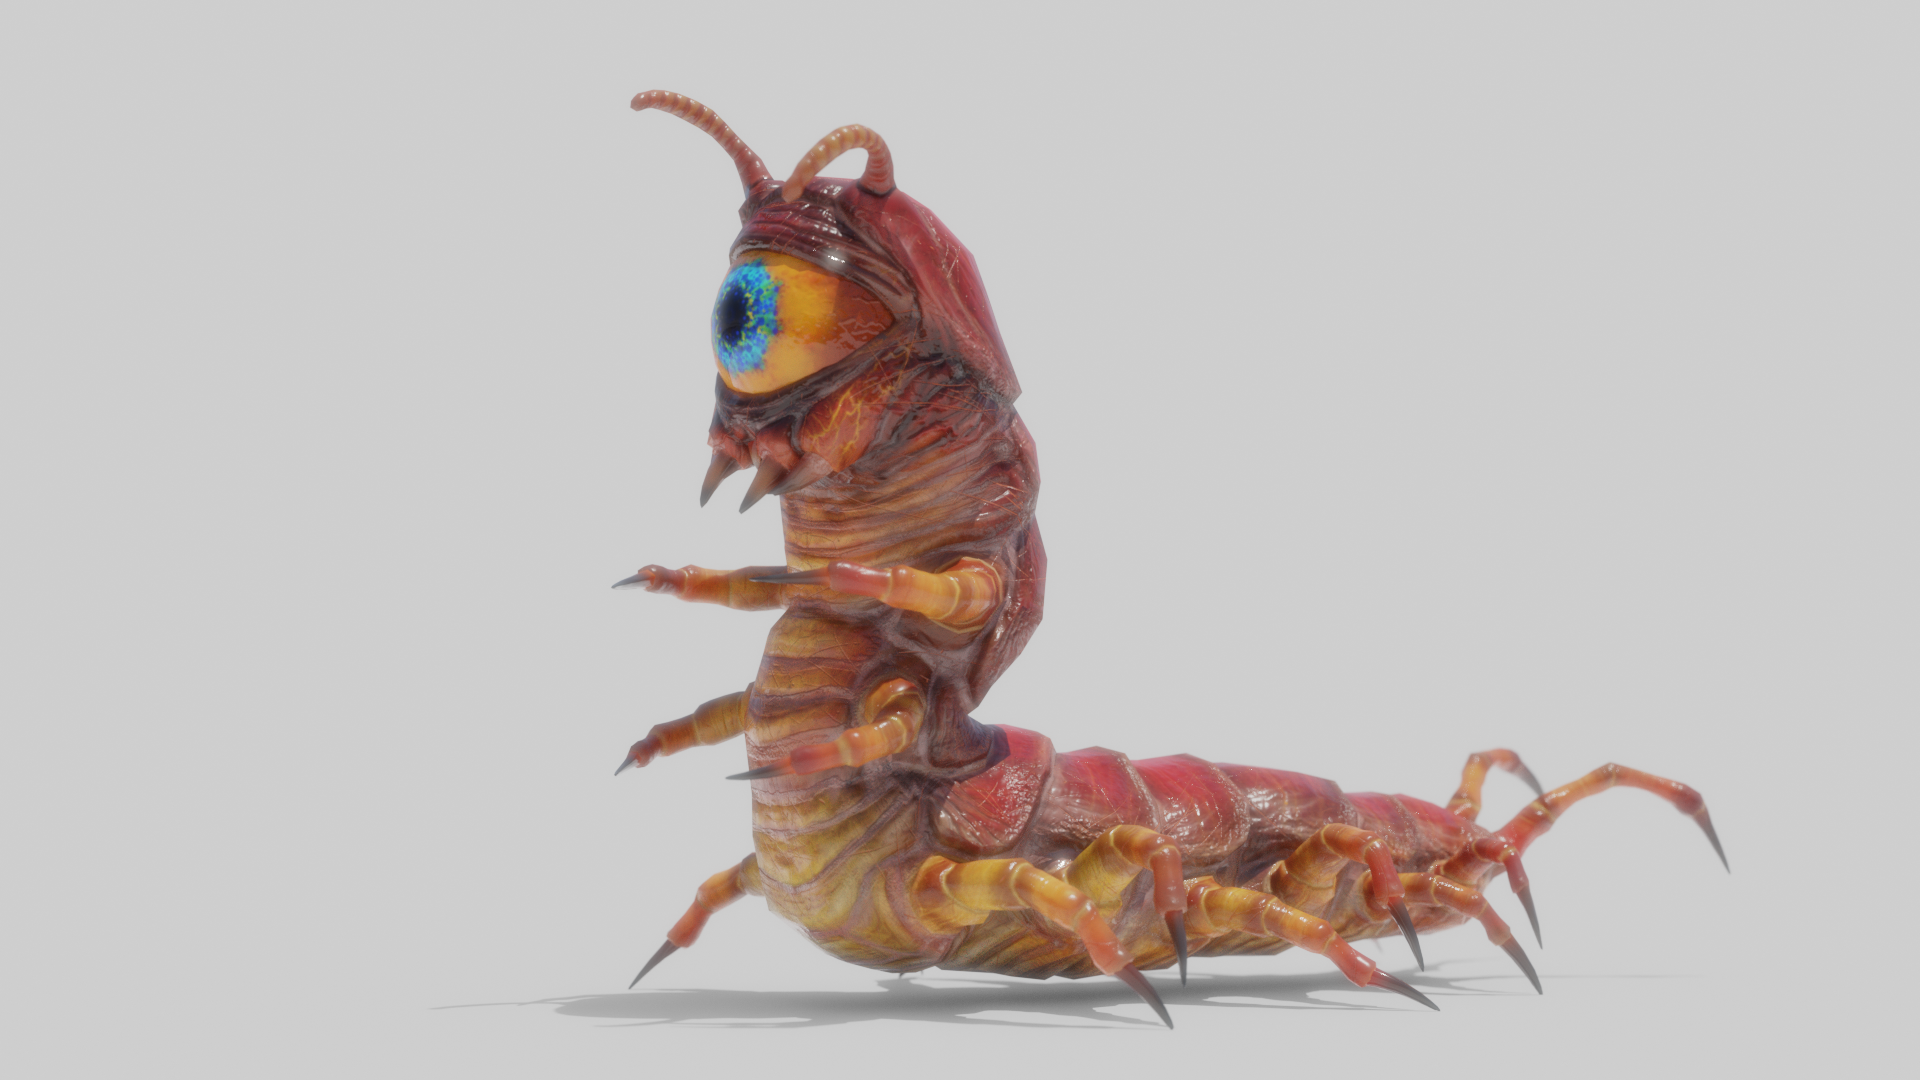 Centipede eyeball monster, standing up and looking heroic.